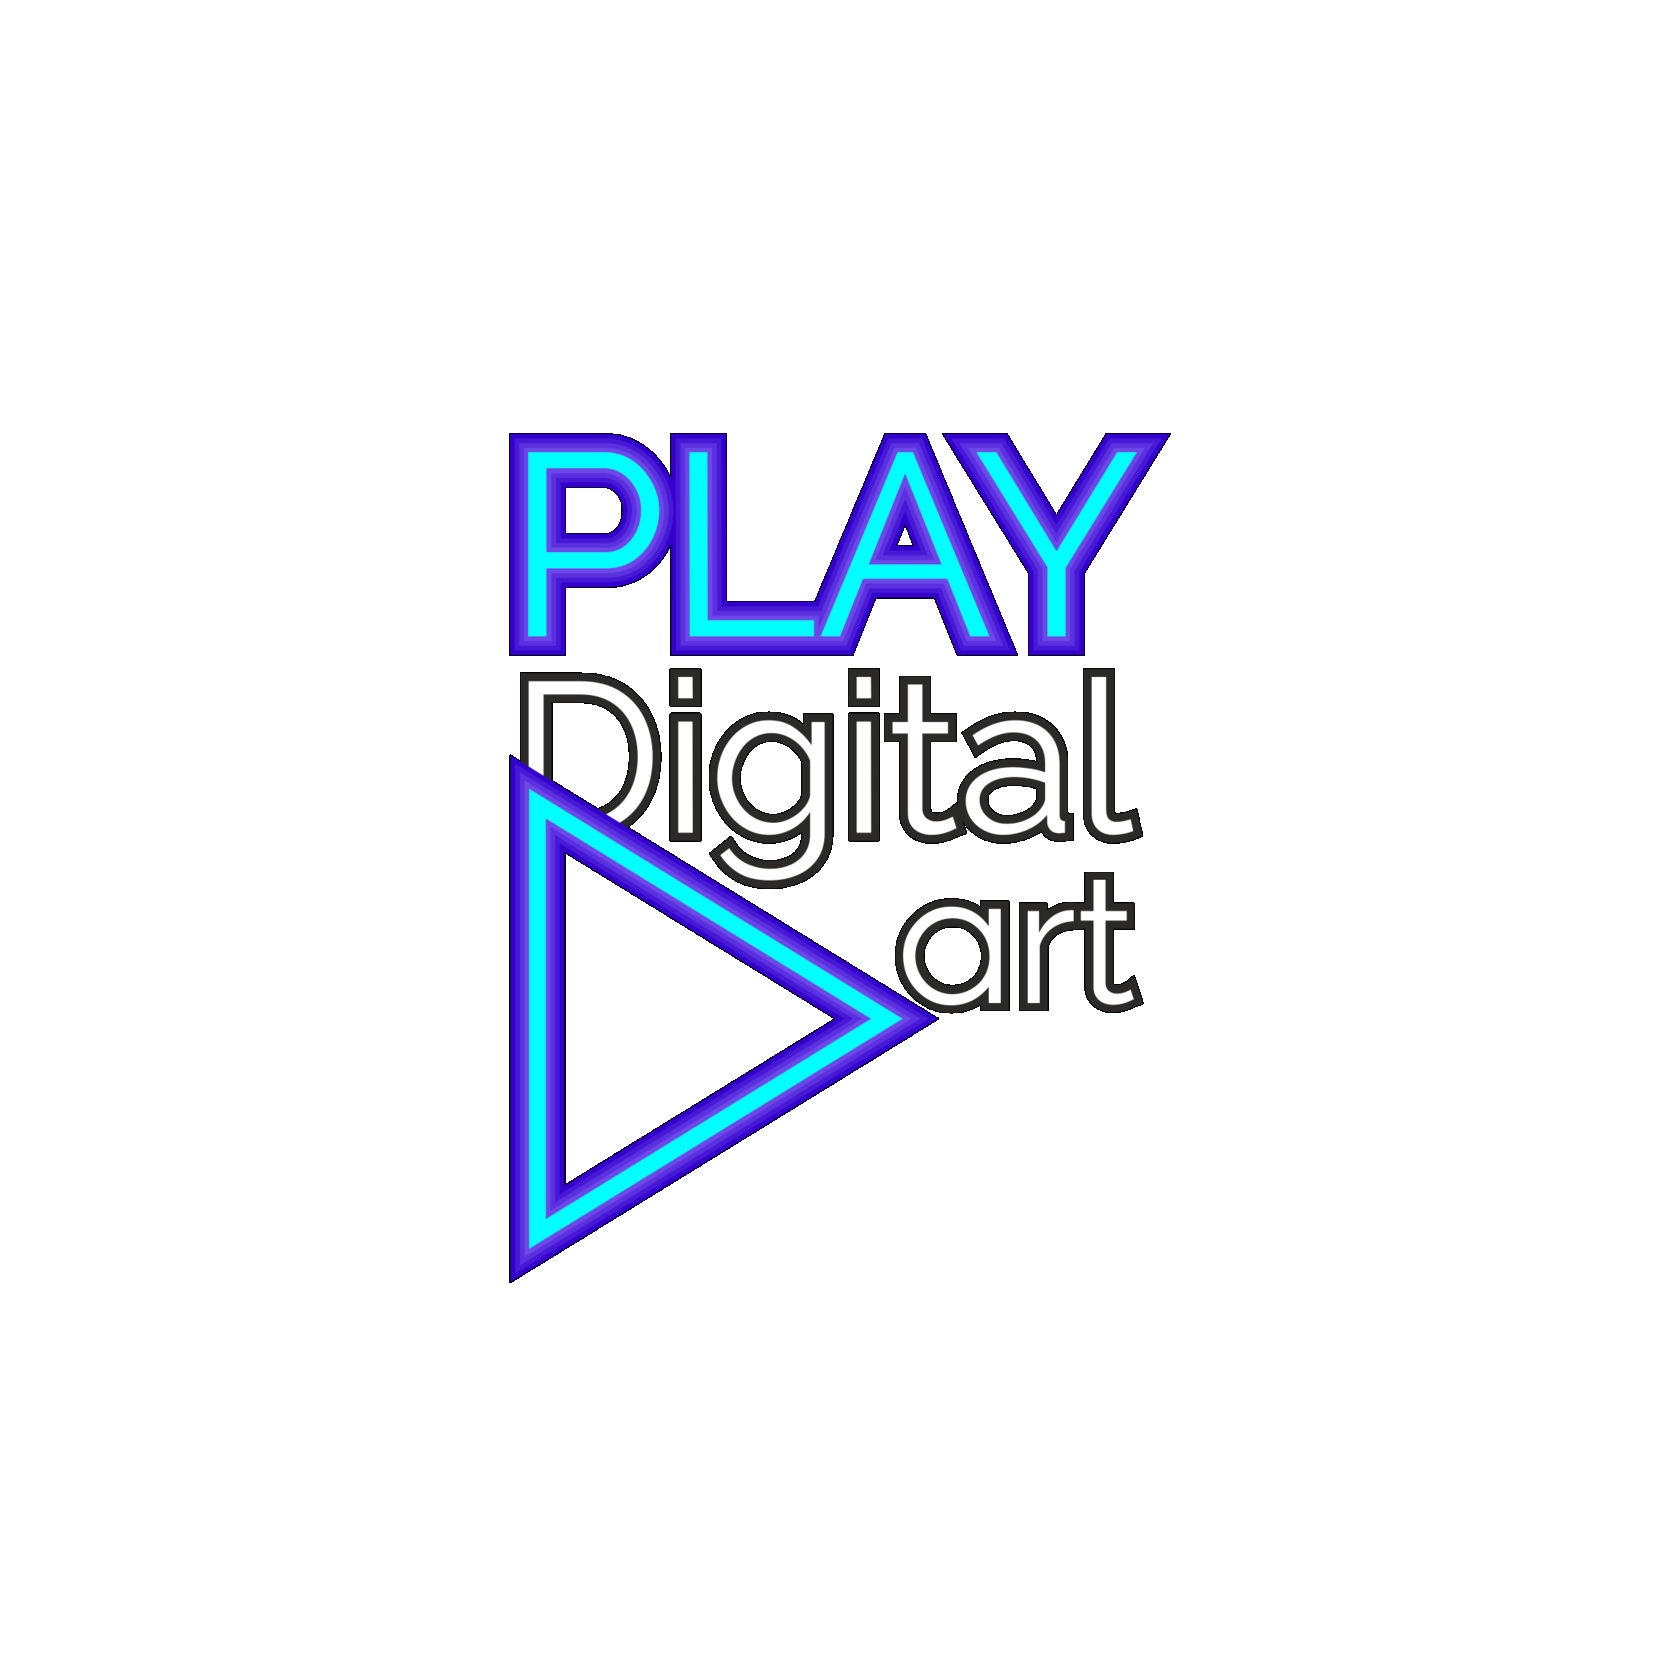 Фестиваль play digital art. Play Digital Art. Play Digital Art фестиваль Екатеринбург. Play digitalart. Арт пространство логотип.